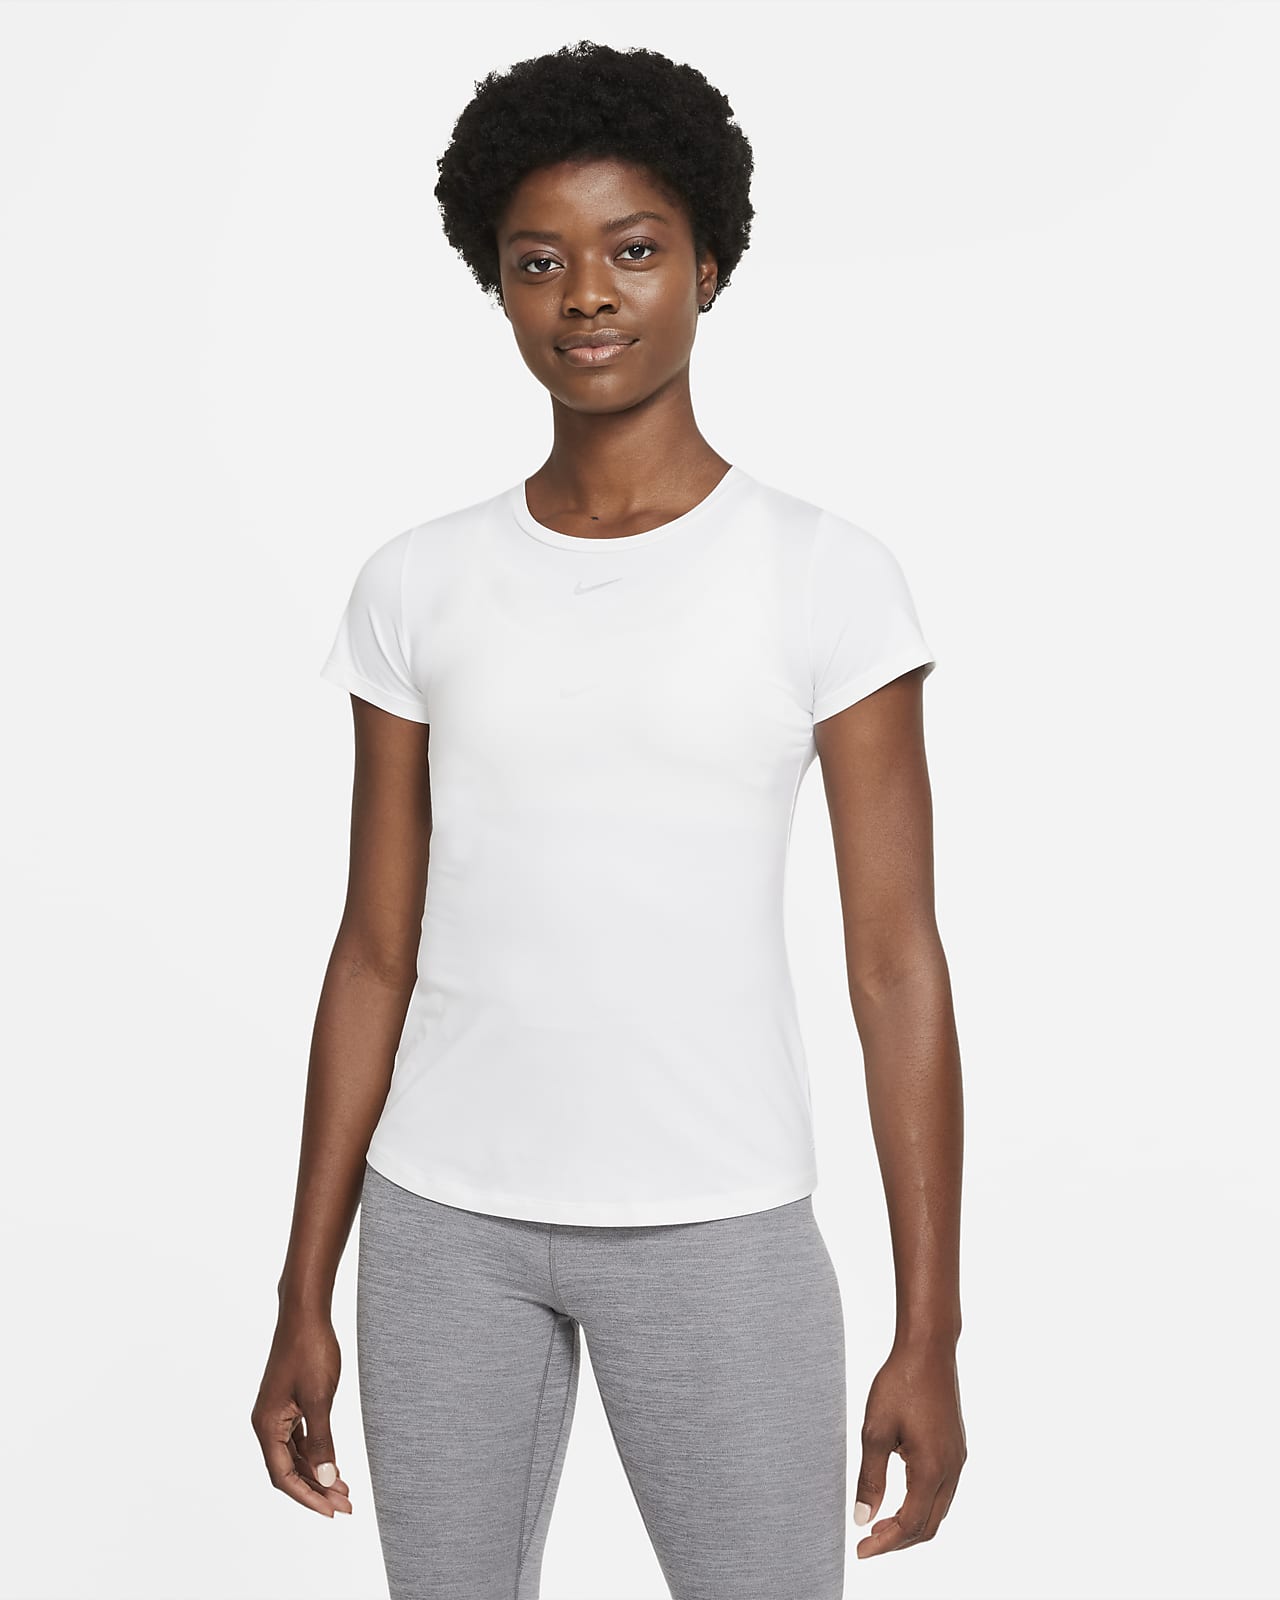 Nike Dri-FIT One Luxe Women's Slim Fit Short-Sleeve Top. Nike.com